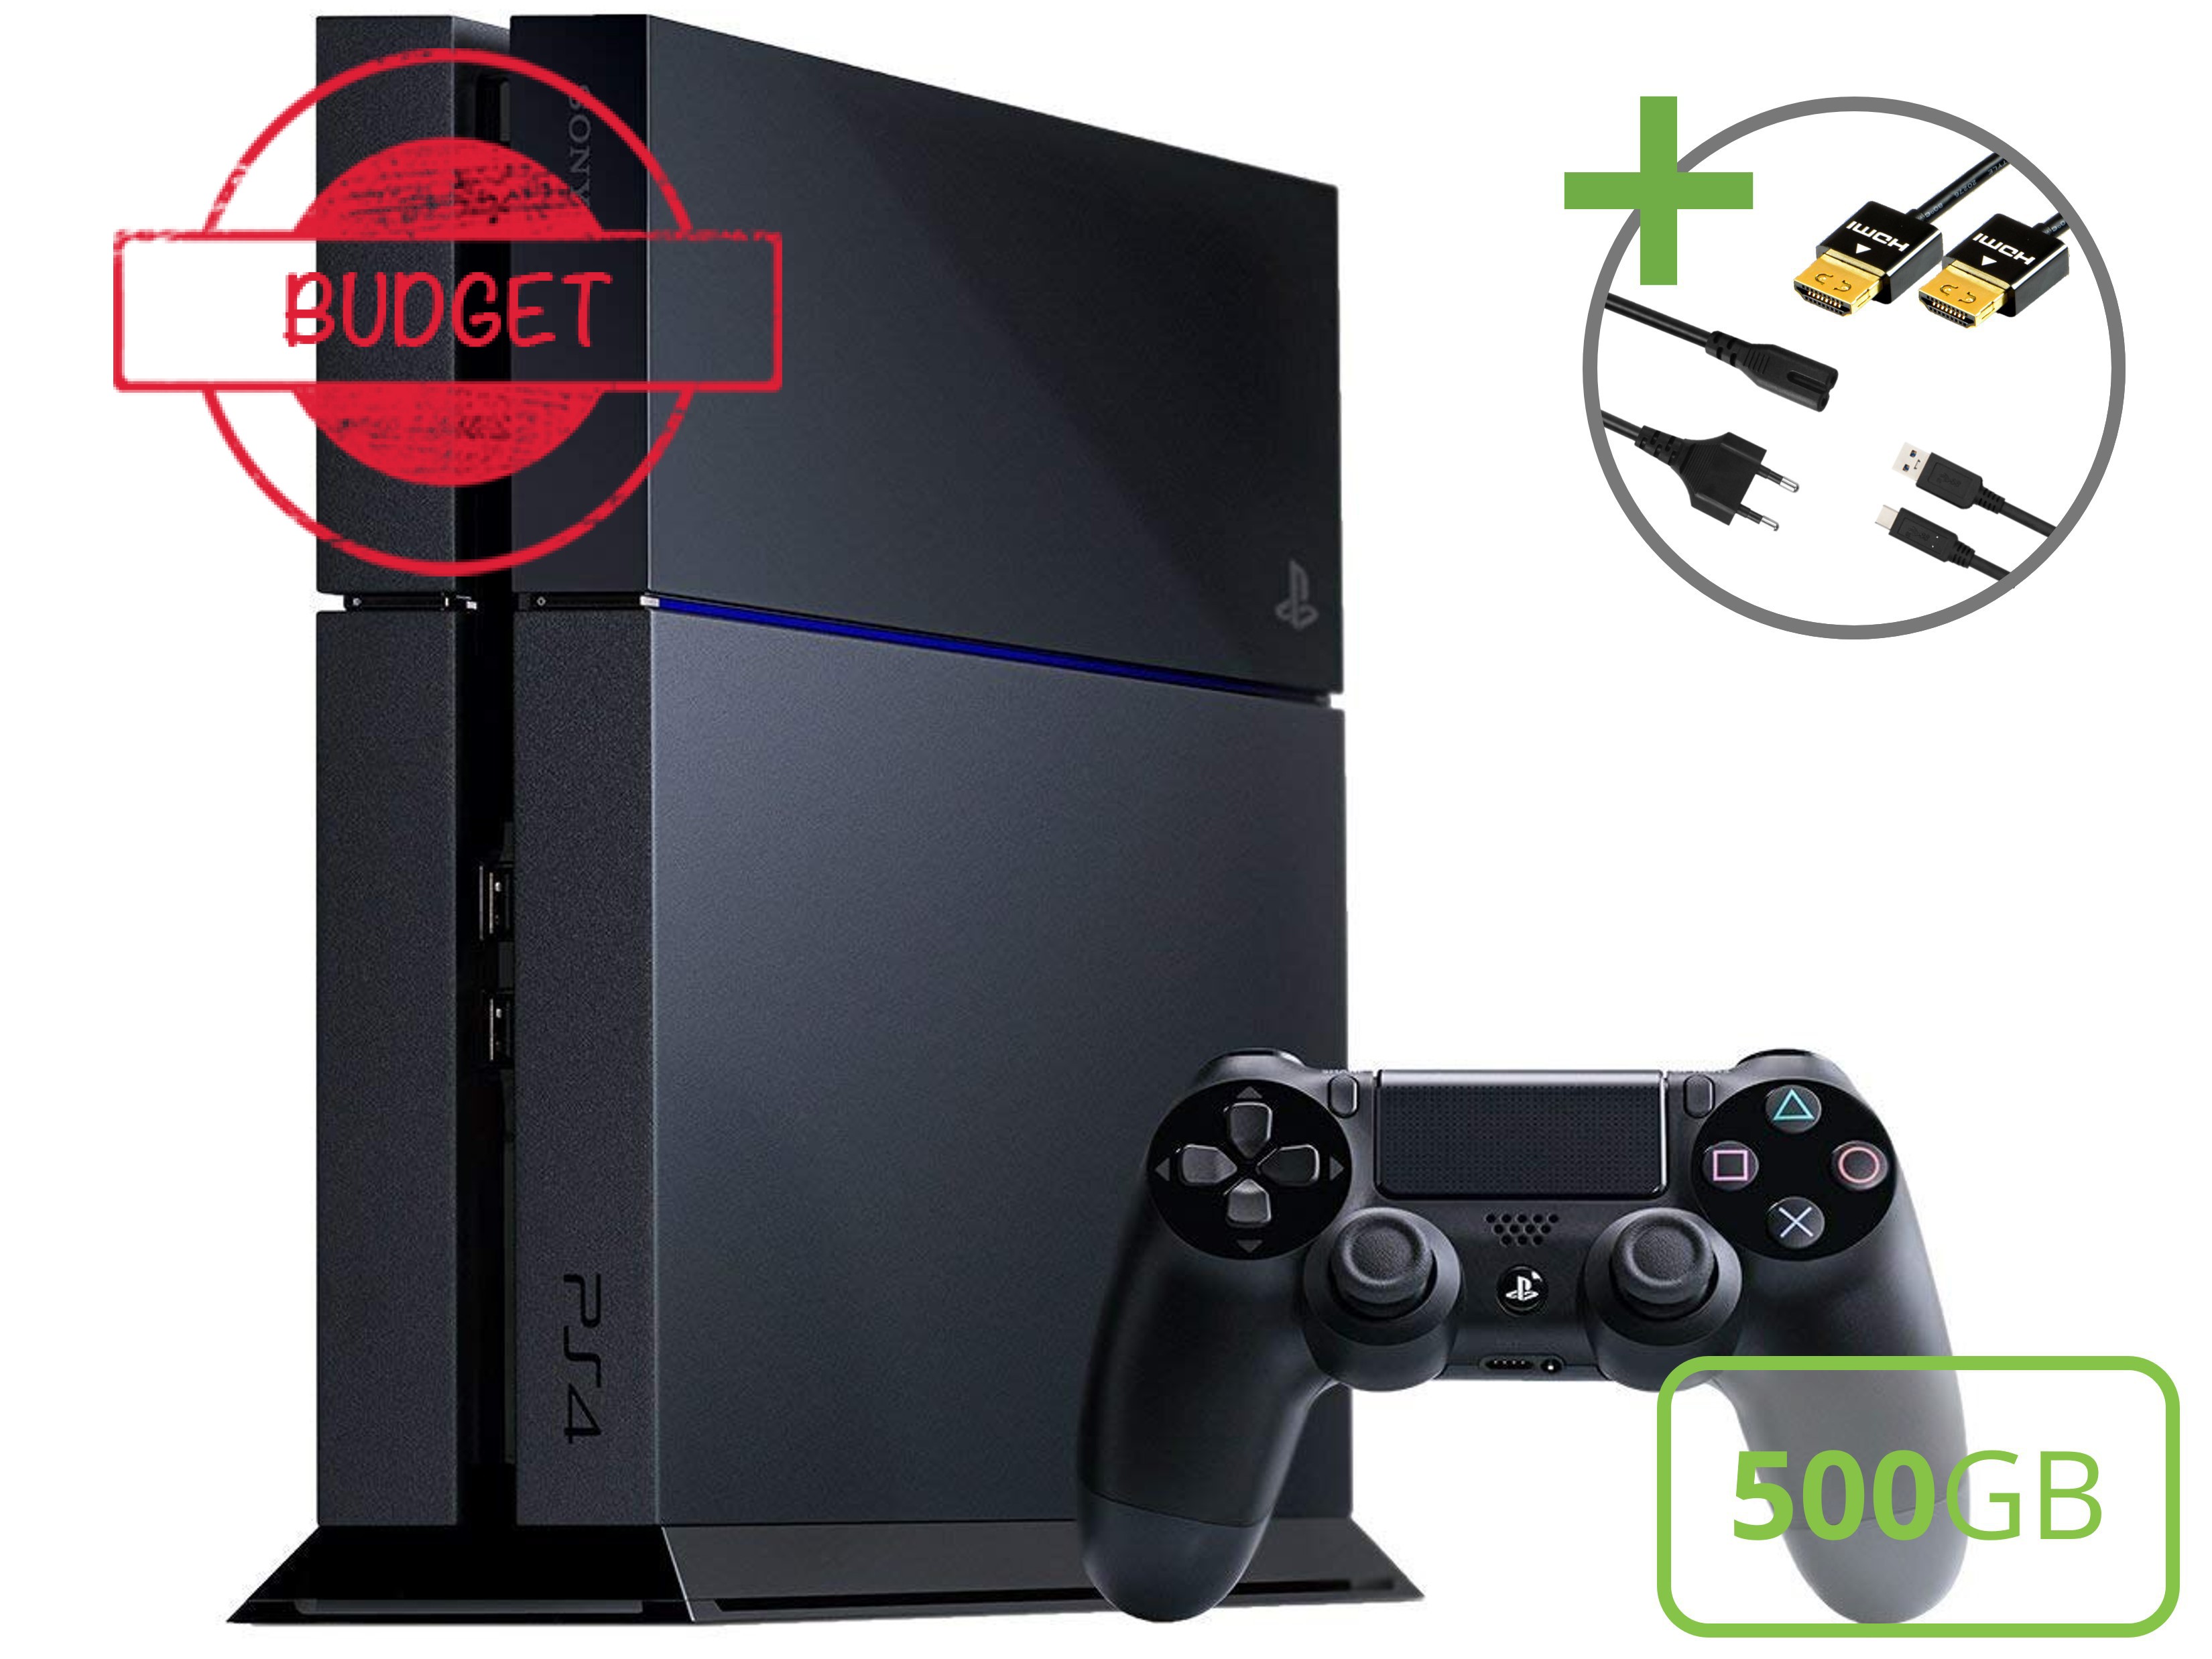 Sony PlayStation 4 Starter Pack - 500GB DualShock V1 Edition - Budget - Playstation 4 Hardware - 2